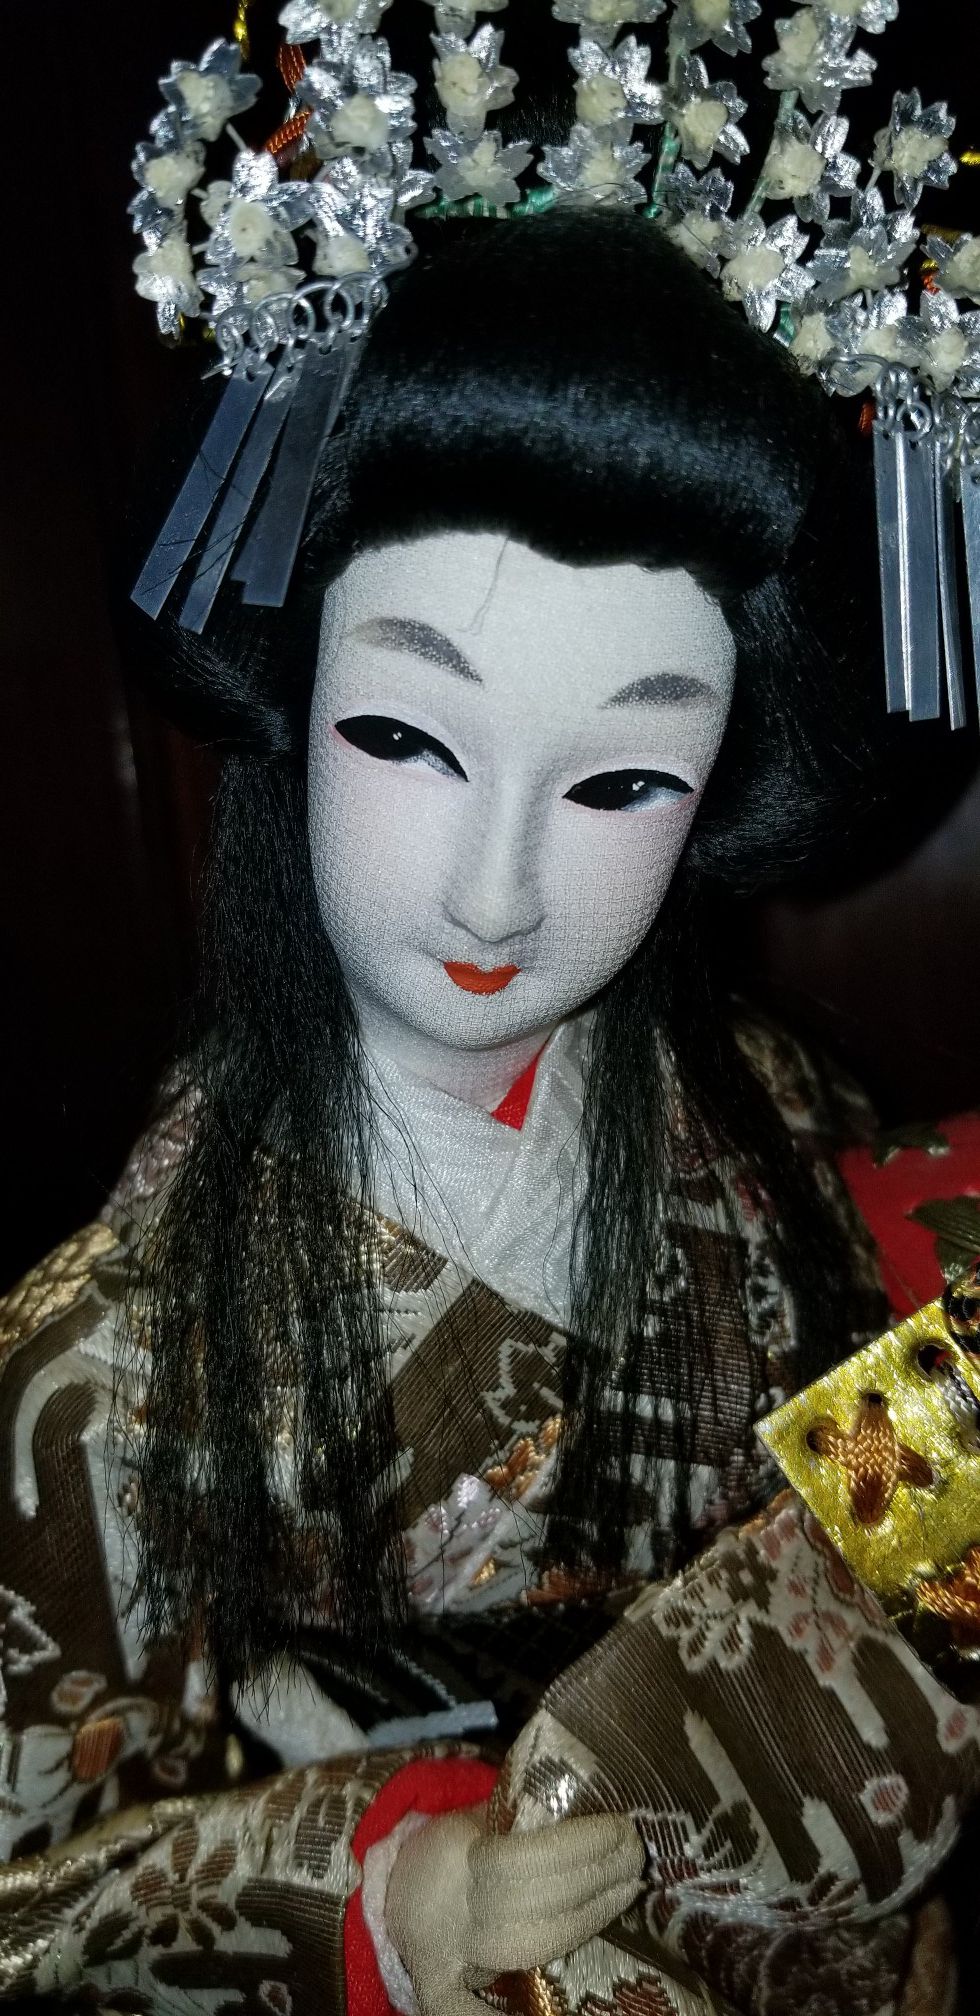 Antique Japanese Geisha doll holding warrior helmet